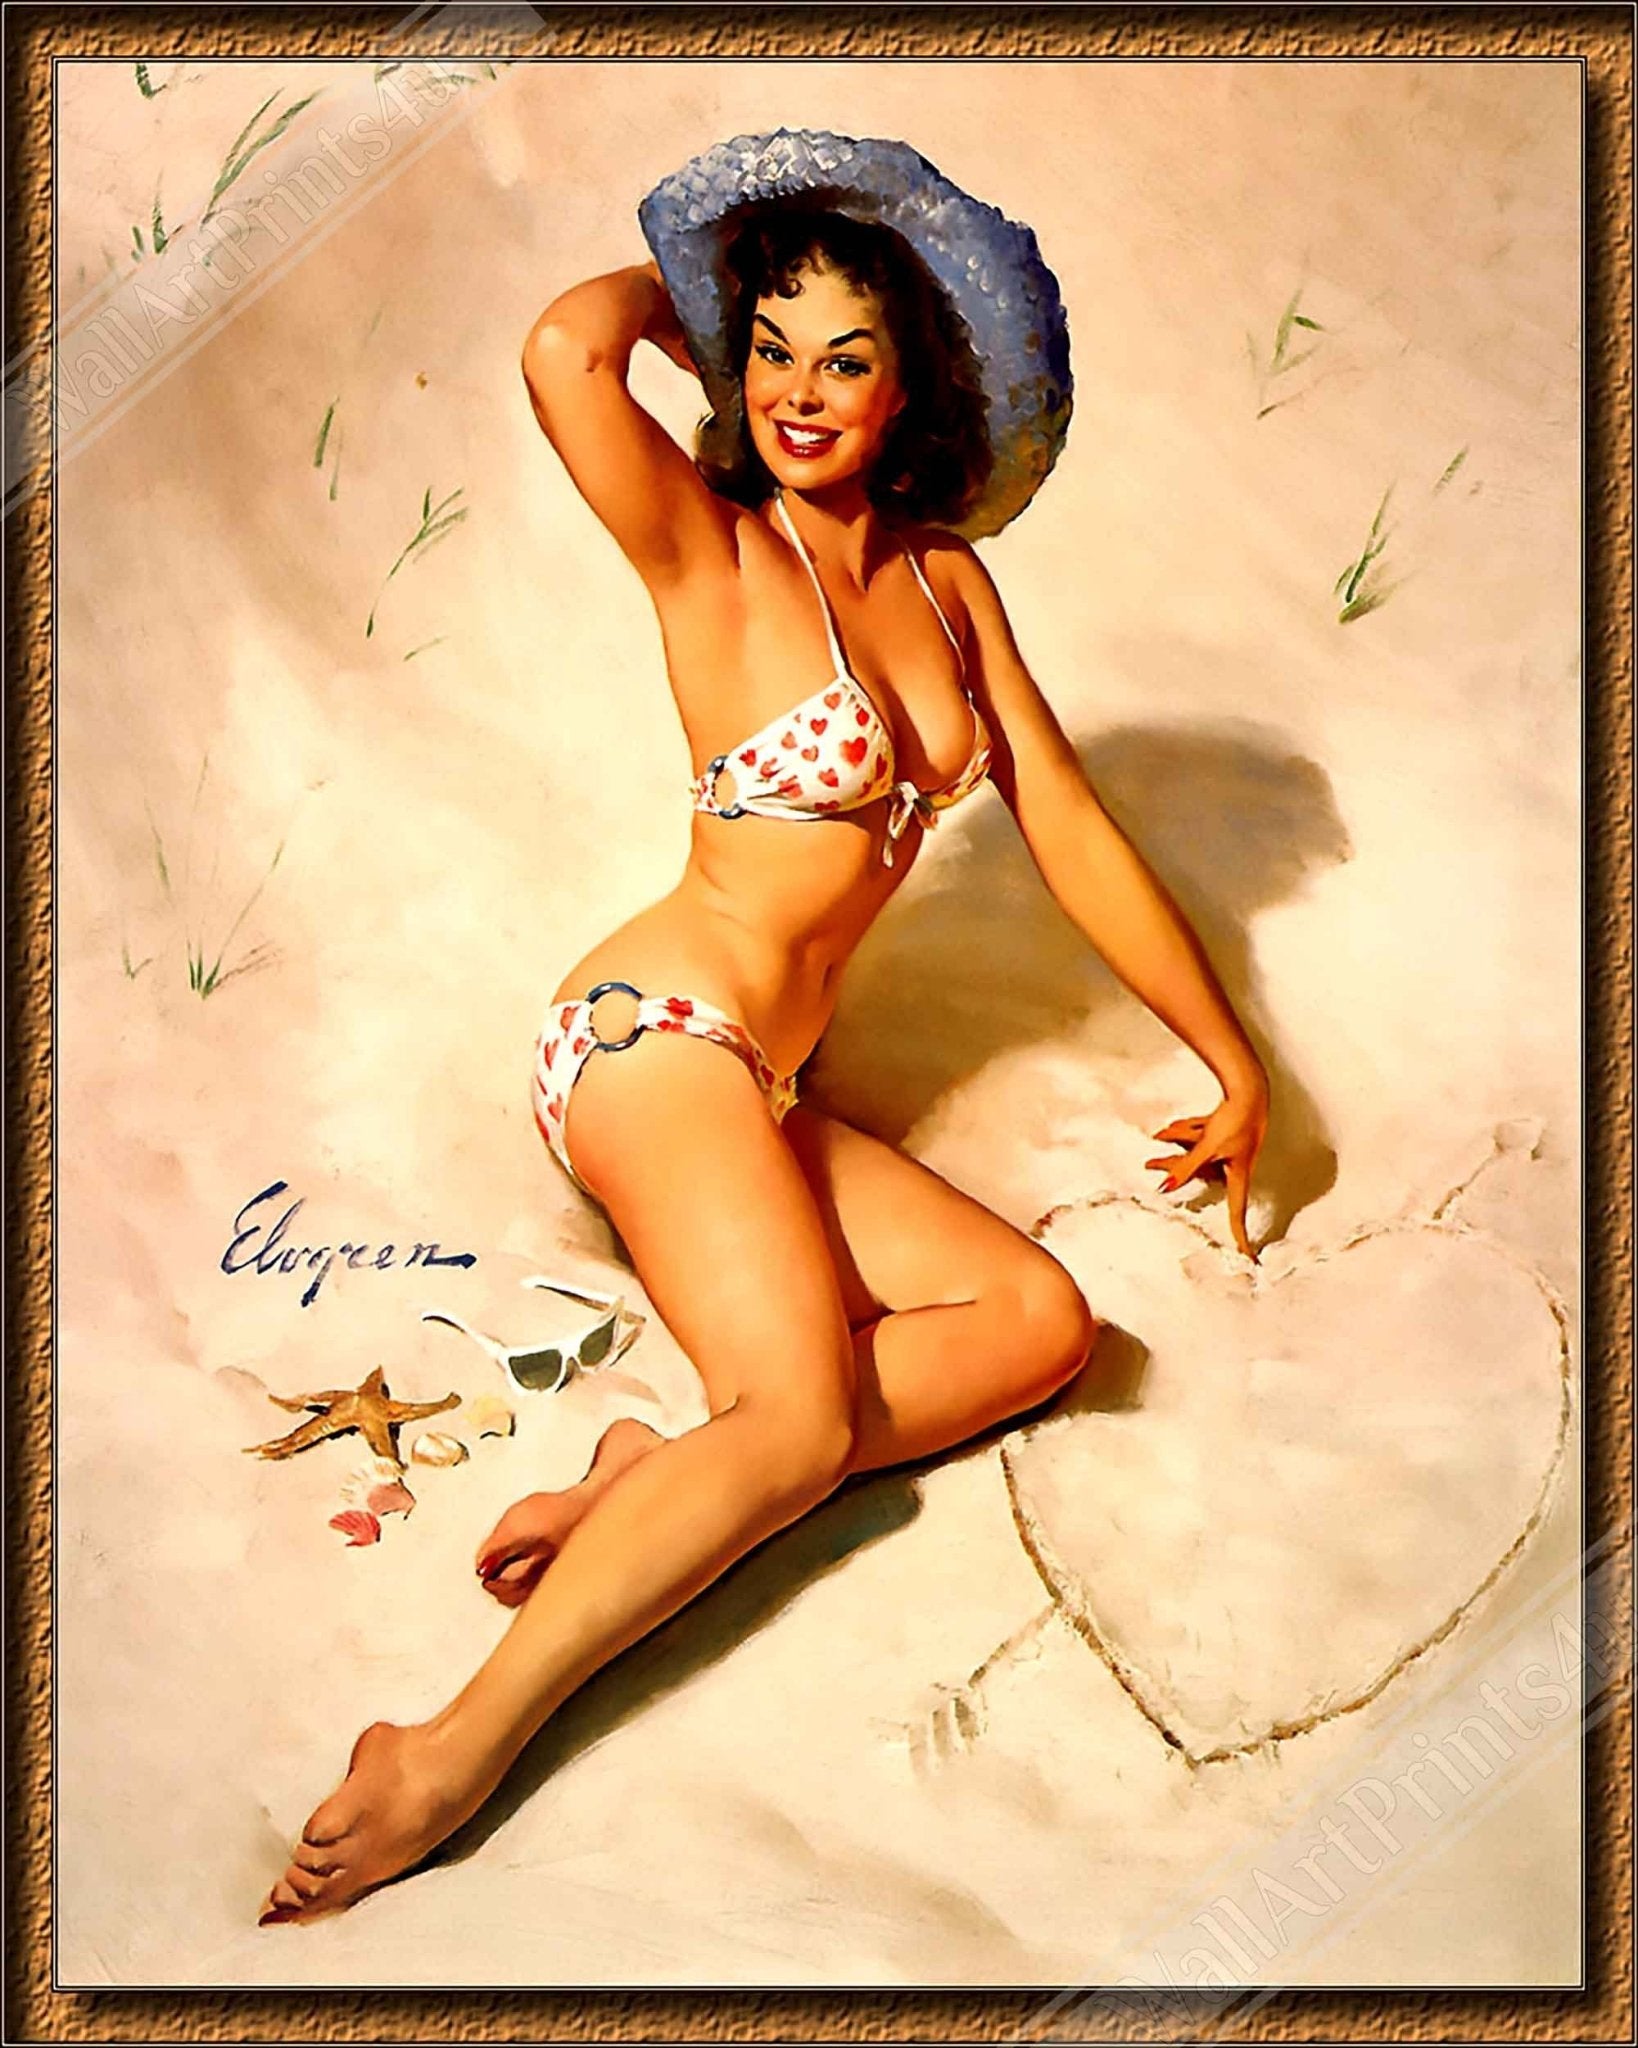 Vintage Pin Up Girl Canvas Print, Bikini With Hearts, Gil Elvgren - Vintage Art - Retro Pin Up Girl Canvas - Late 1940's - 1950's - WallArtPrints4U